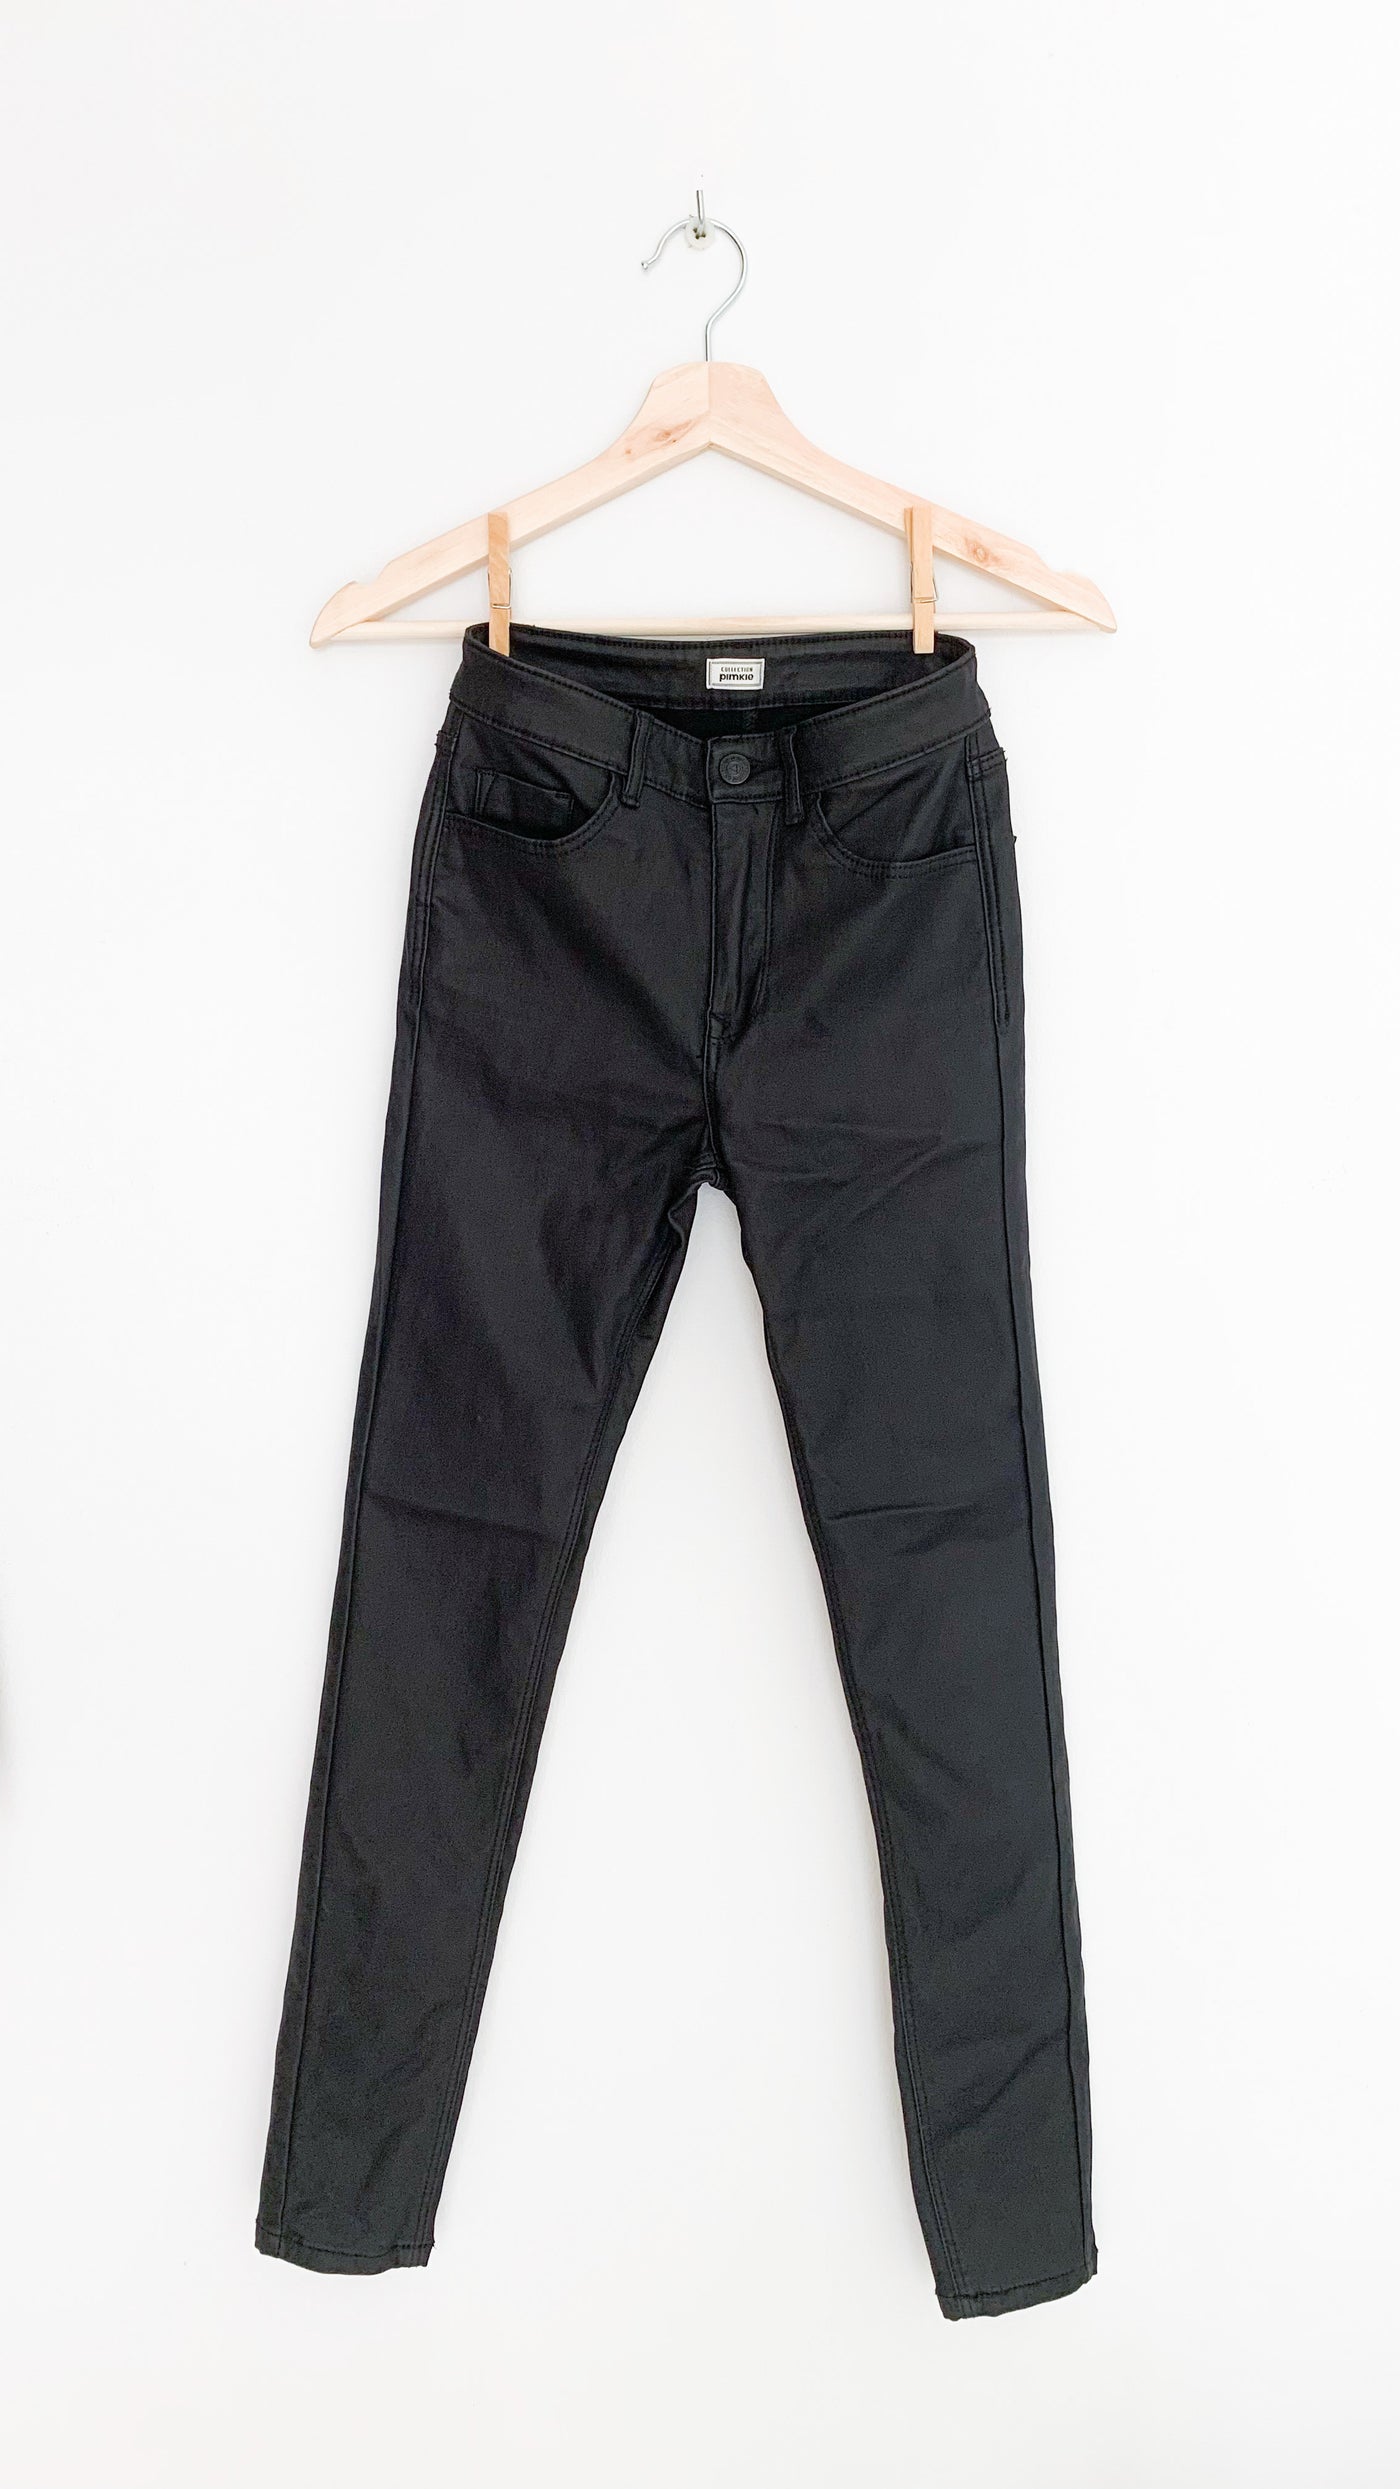 pantalones de polipiel negros